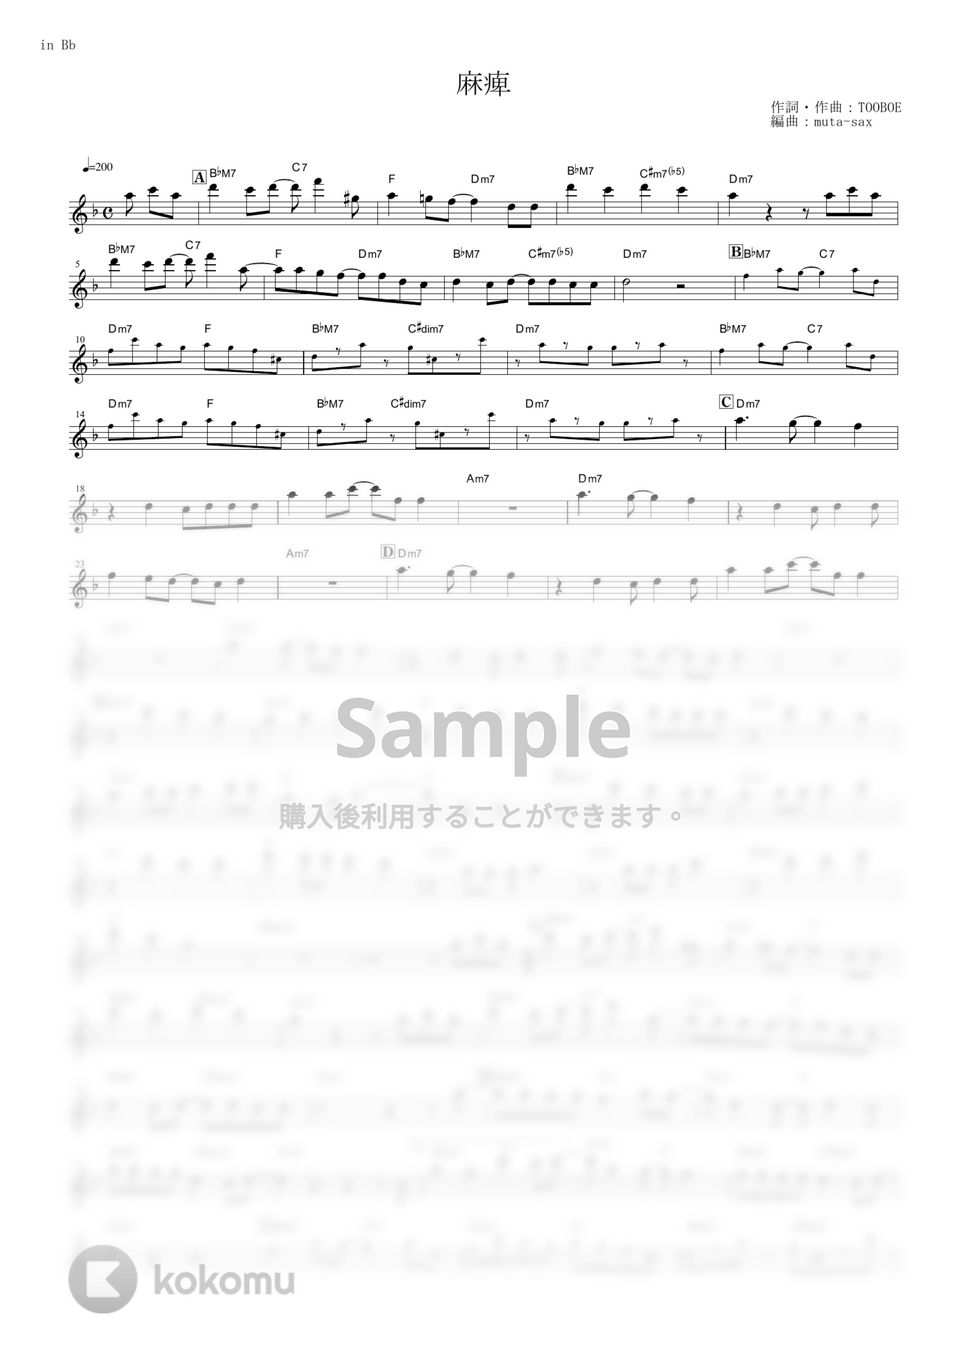 yama - 麻痺 (『2.43 清陰高校男子バレー部』 / in Bb) by muta-sax